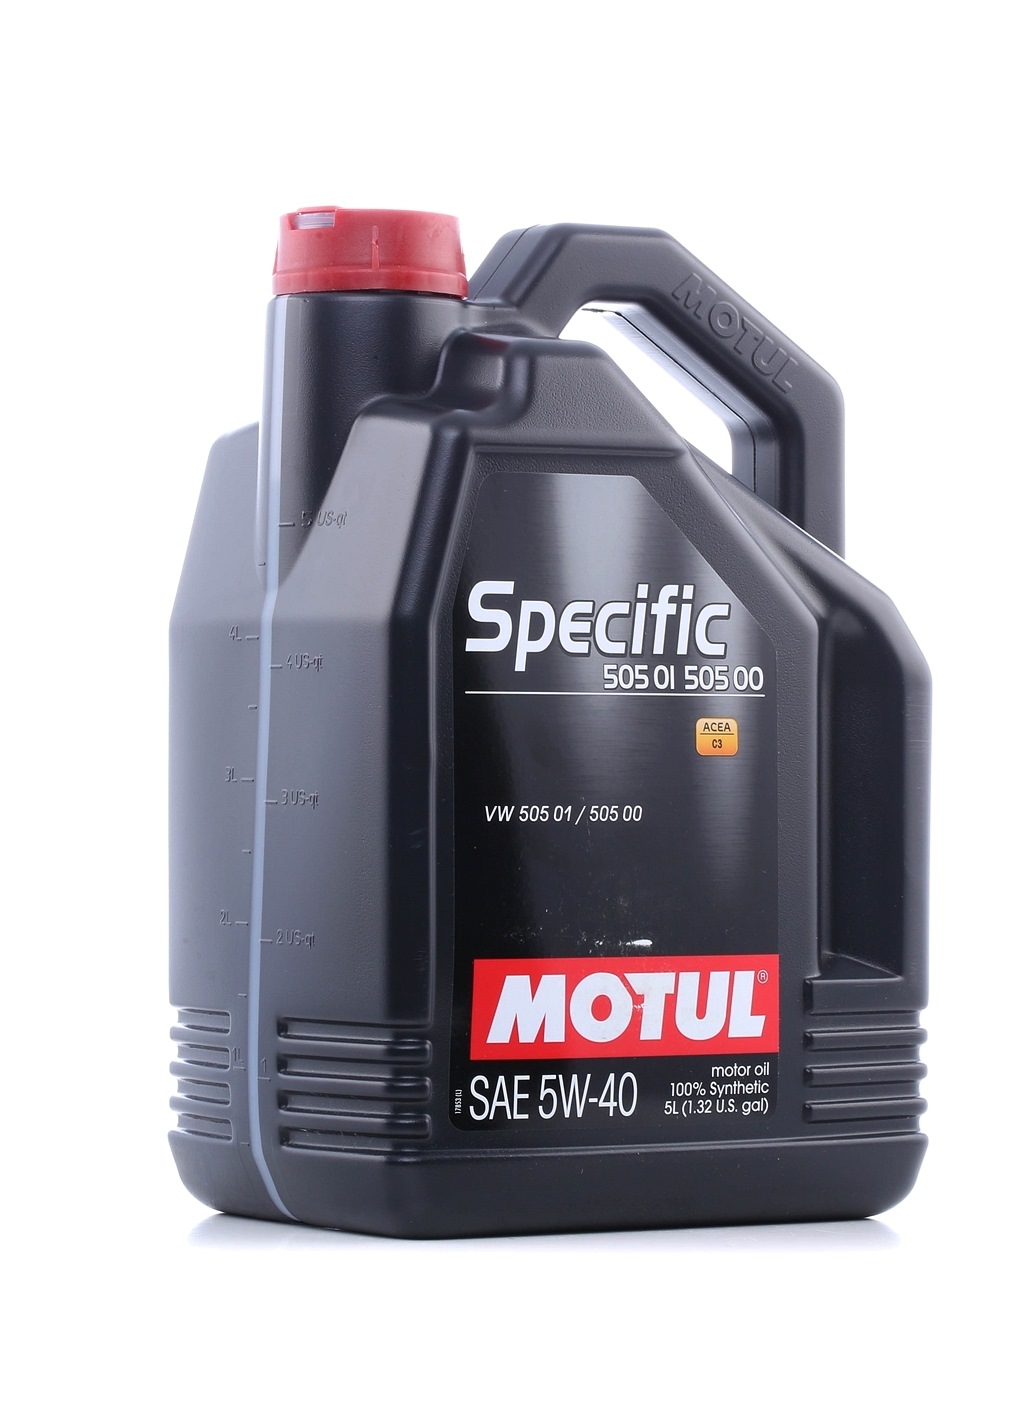 MOTUL SPECIFIC, 505 01 505 00 101575 Engine oil 5W-40, 5l, Synthetic Oil